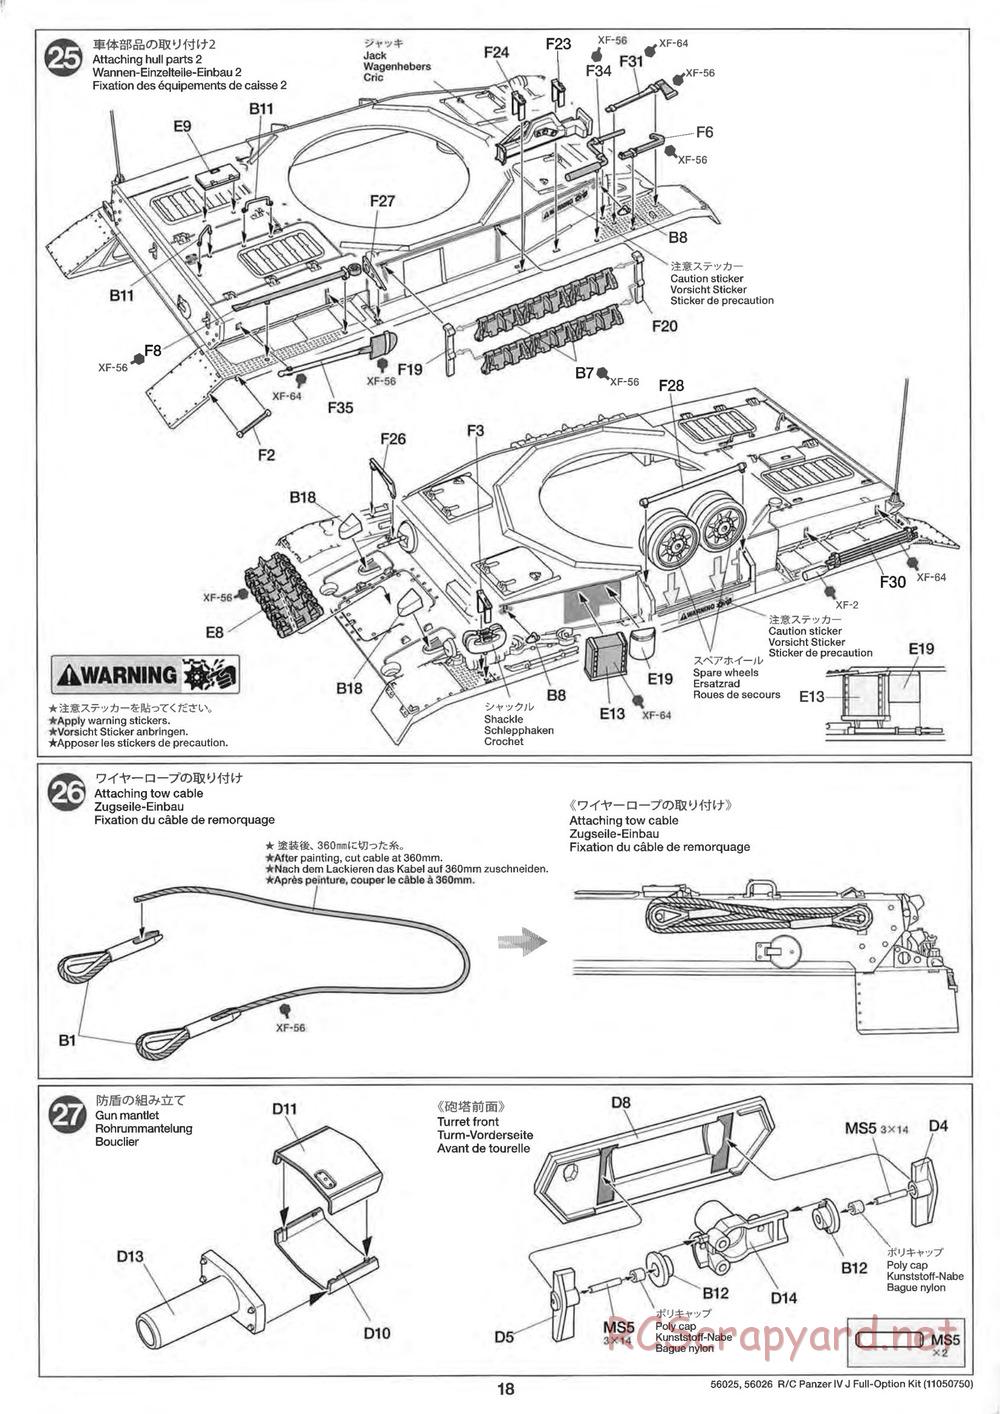 Tamiya - Panzerkampfwagen IV Ausf.J - 1/16 Scale Chassis - Manual - Page 18